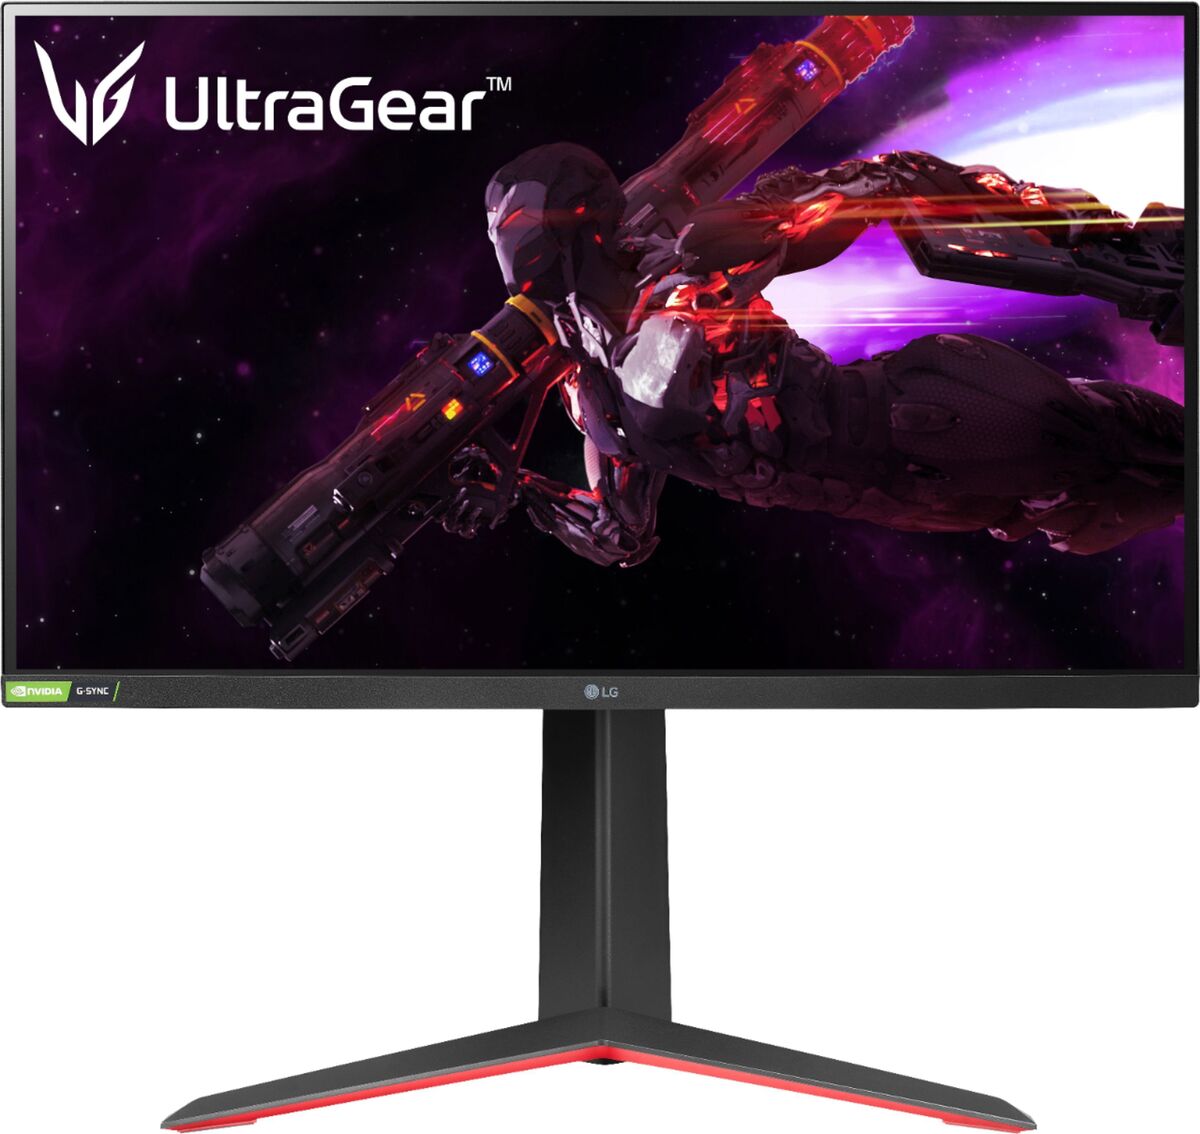 LG UltraGear gaming monitor